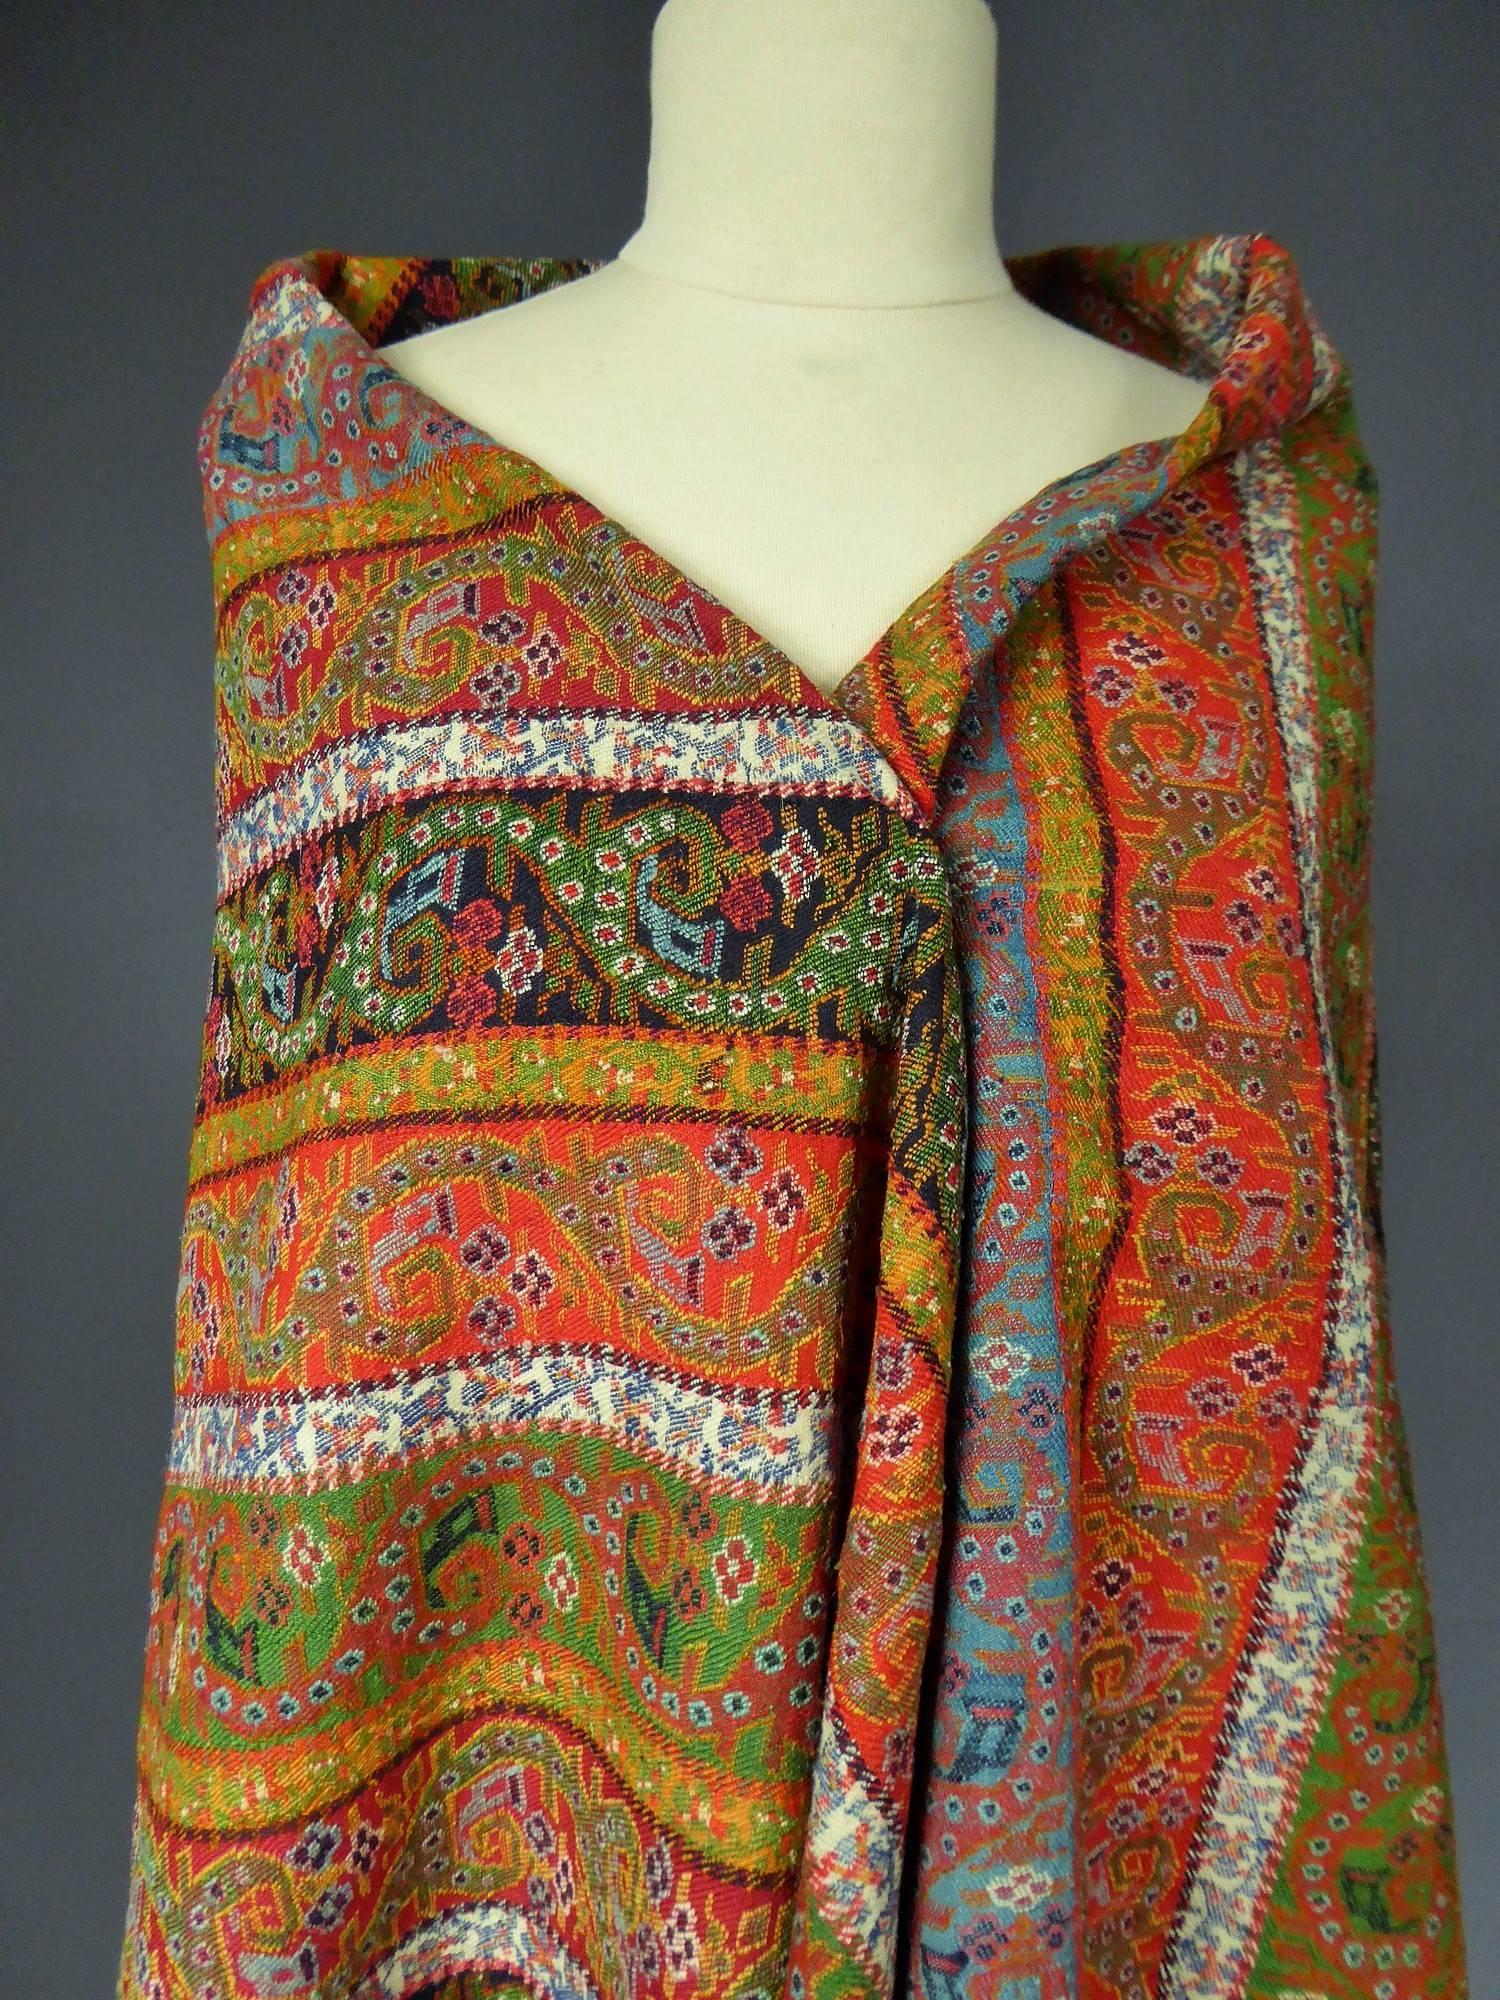 Twill weave striped kashmir shawl  - India or Persia 19th century 7